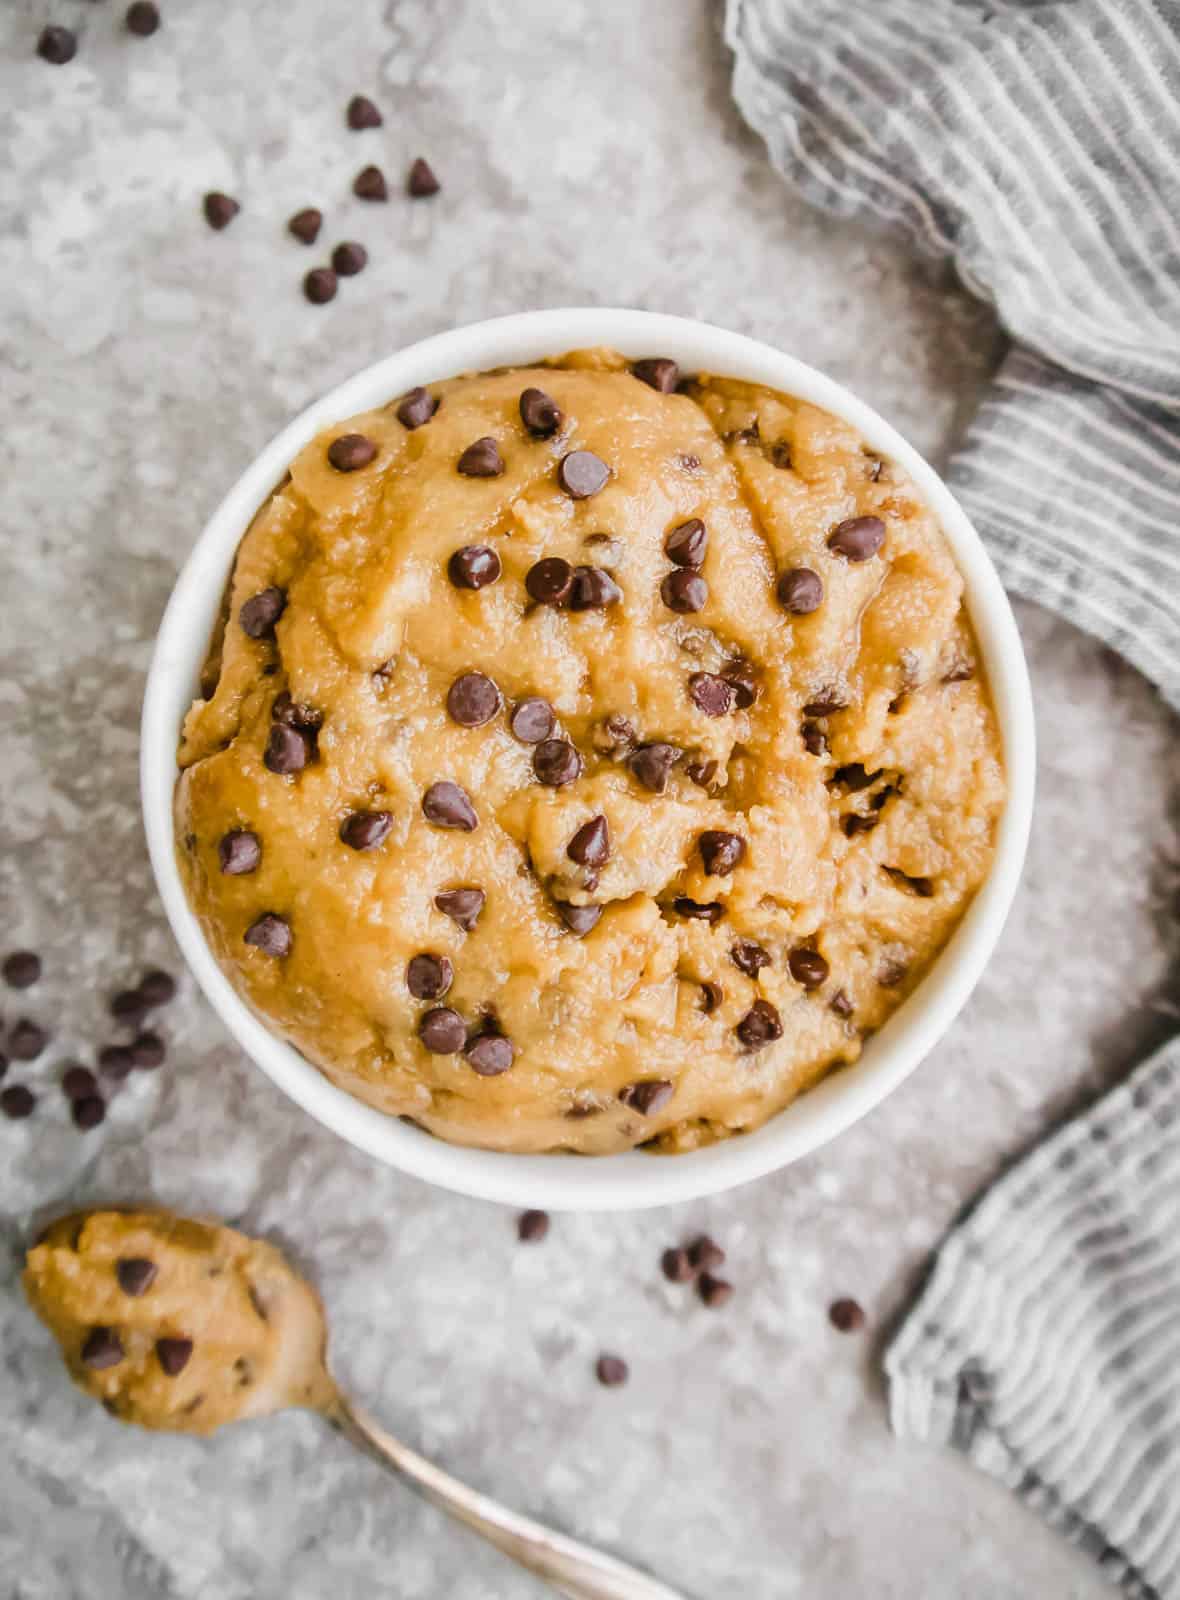 Gluten free edible cookie dough in a bowl.